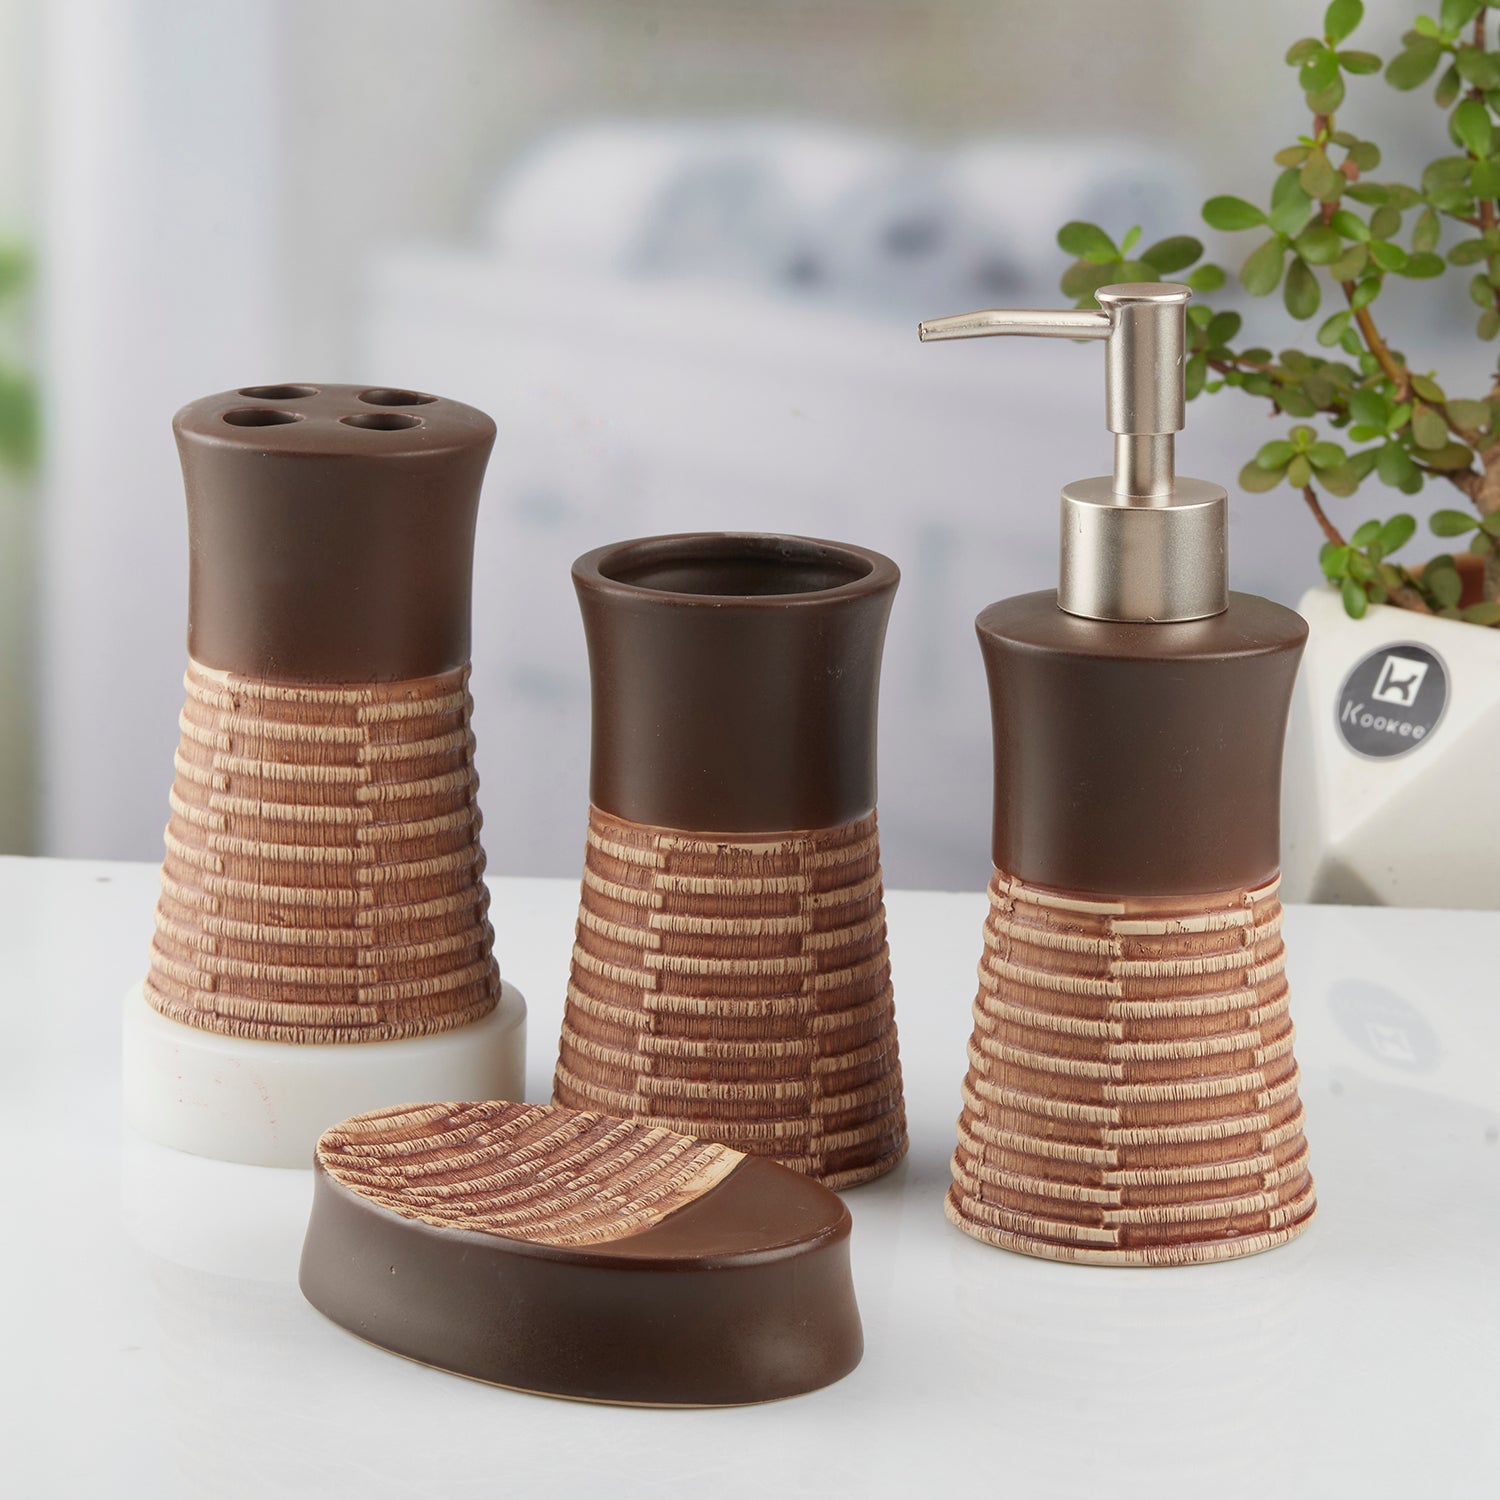 Ceramic Bathroom Set of 4 with Soap Dispenser (10437)